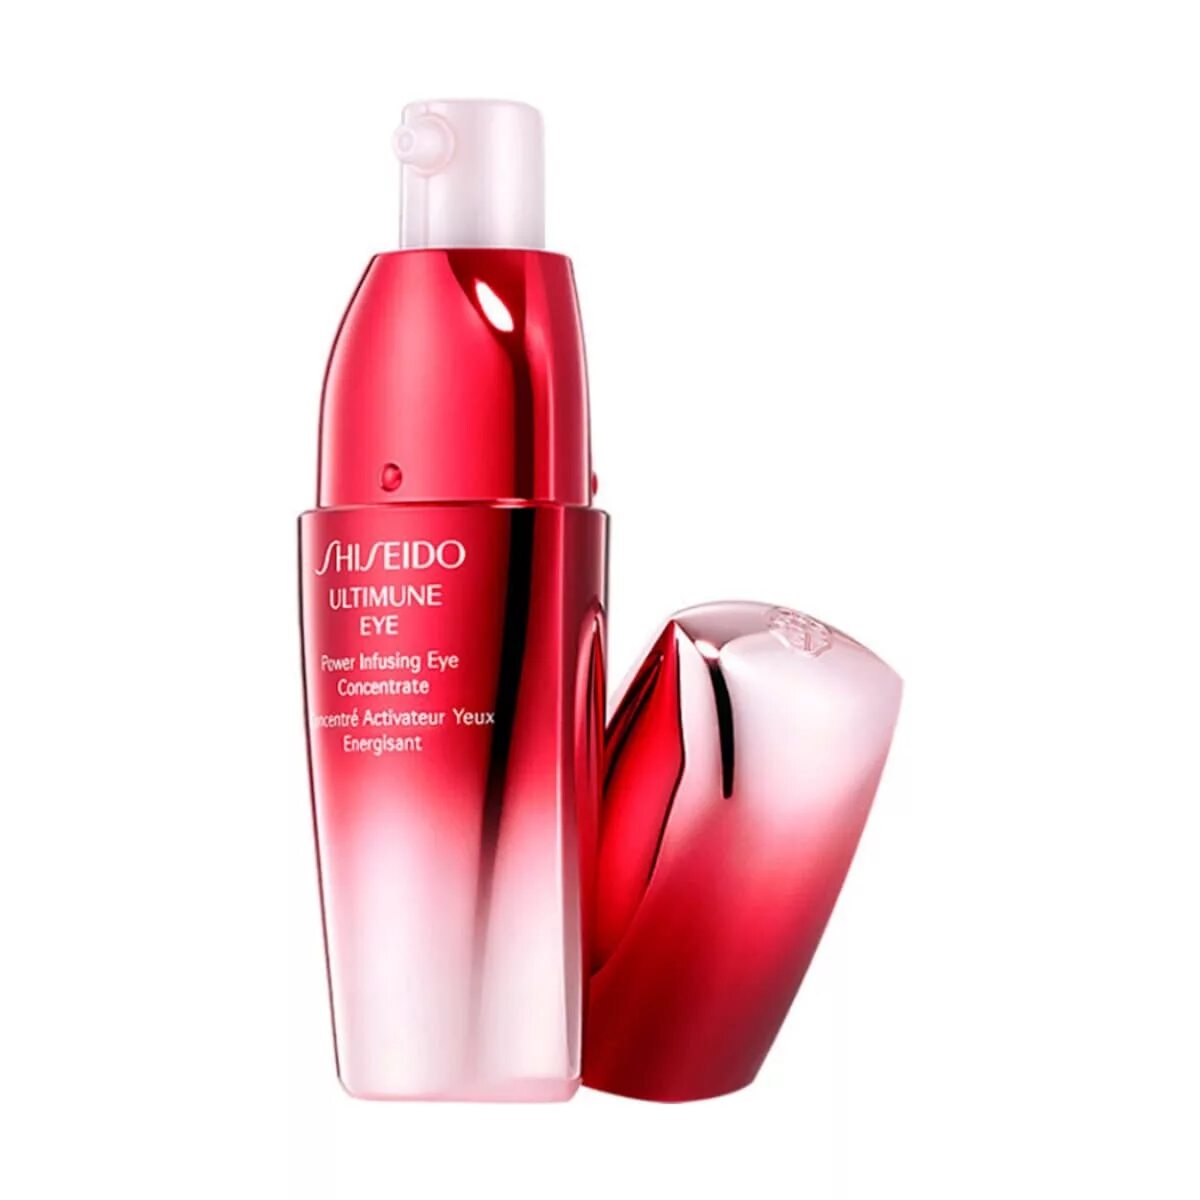 Shiseido концентрат. Shiseido Ultimune концентрат. Ультимьюн шисейдо. Shiseido Ultimune Eye Power infusing. Shiseido Ultimate.